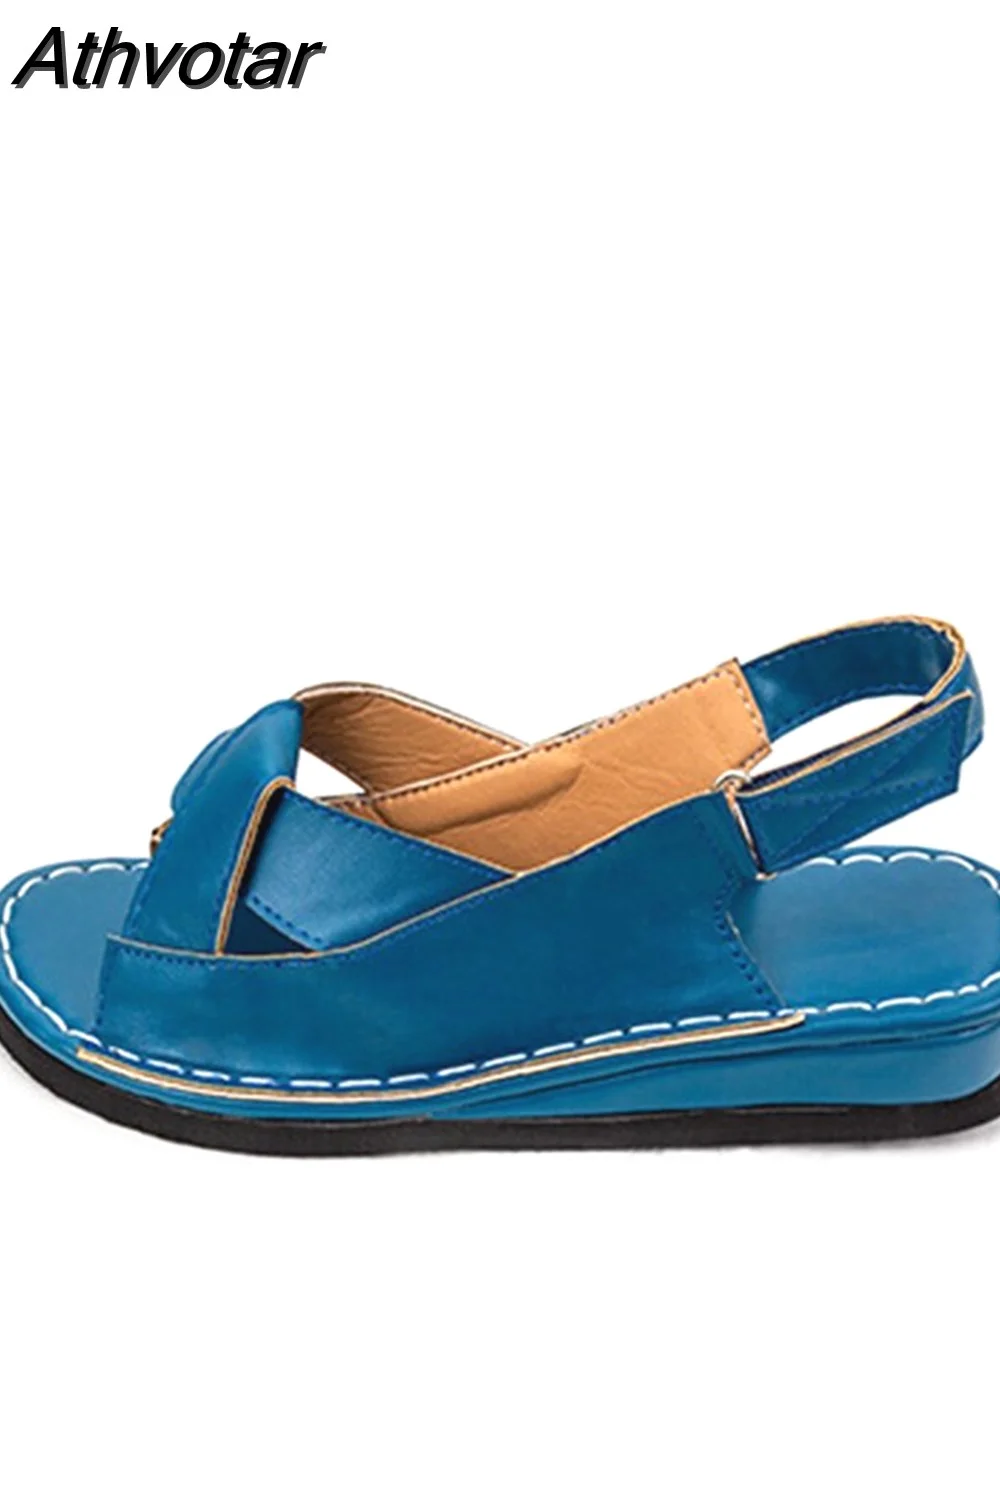 Athvotar Sandals Summer Female Shoes Women's Peep Toe Wedge Woman Comfortable Plus Size Female Platform Ladies New 2023 601-0